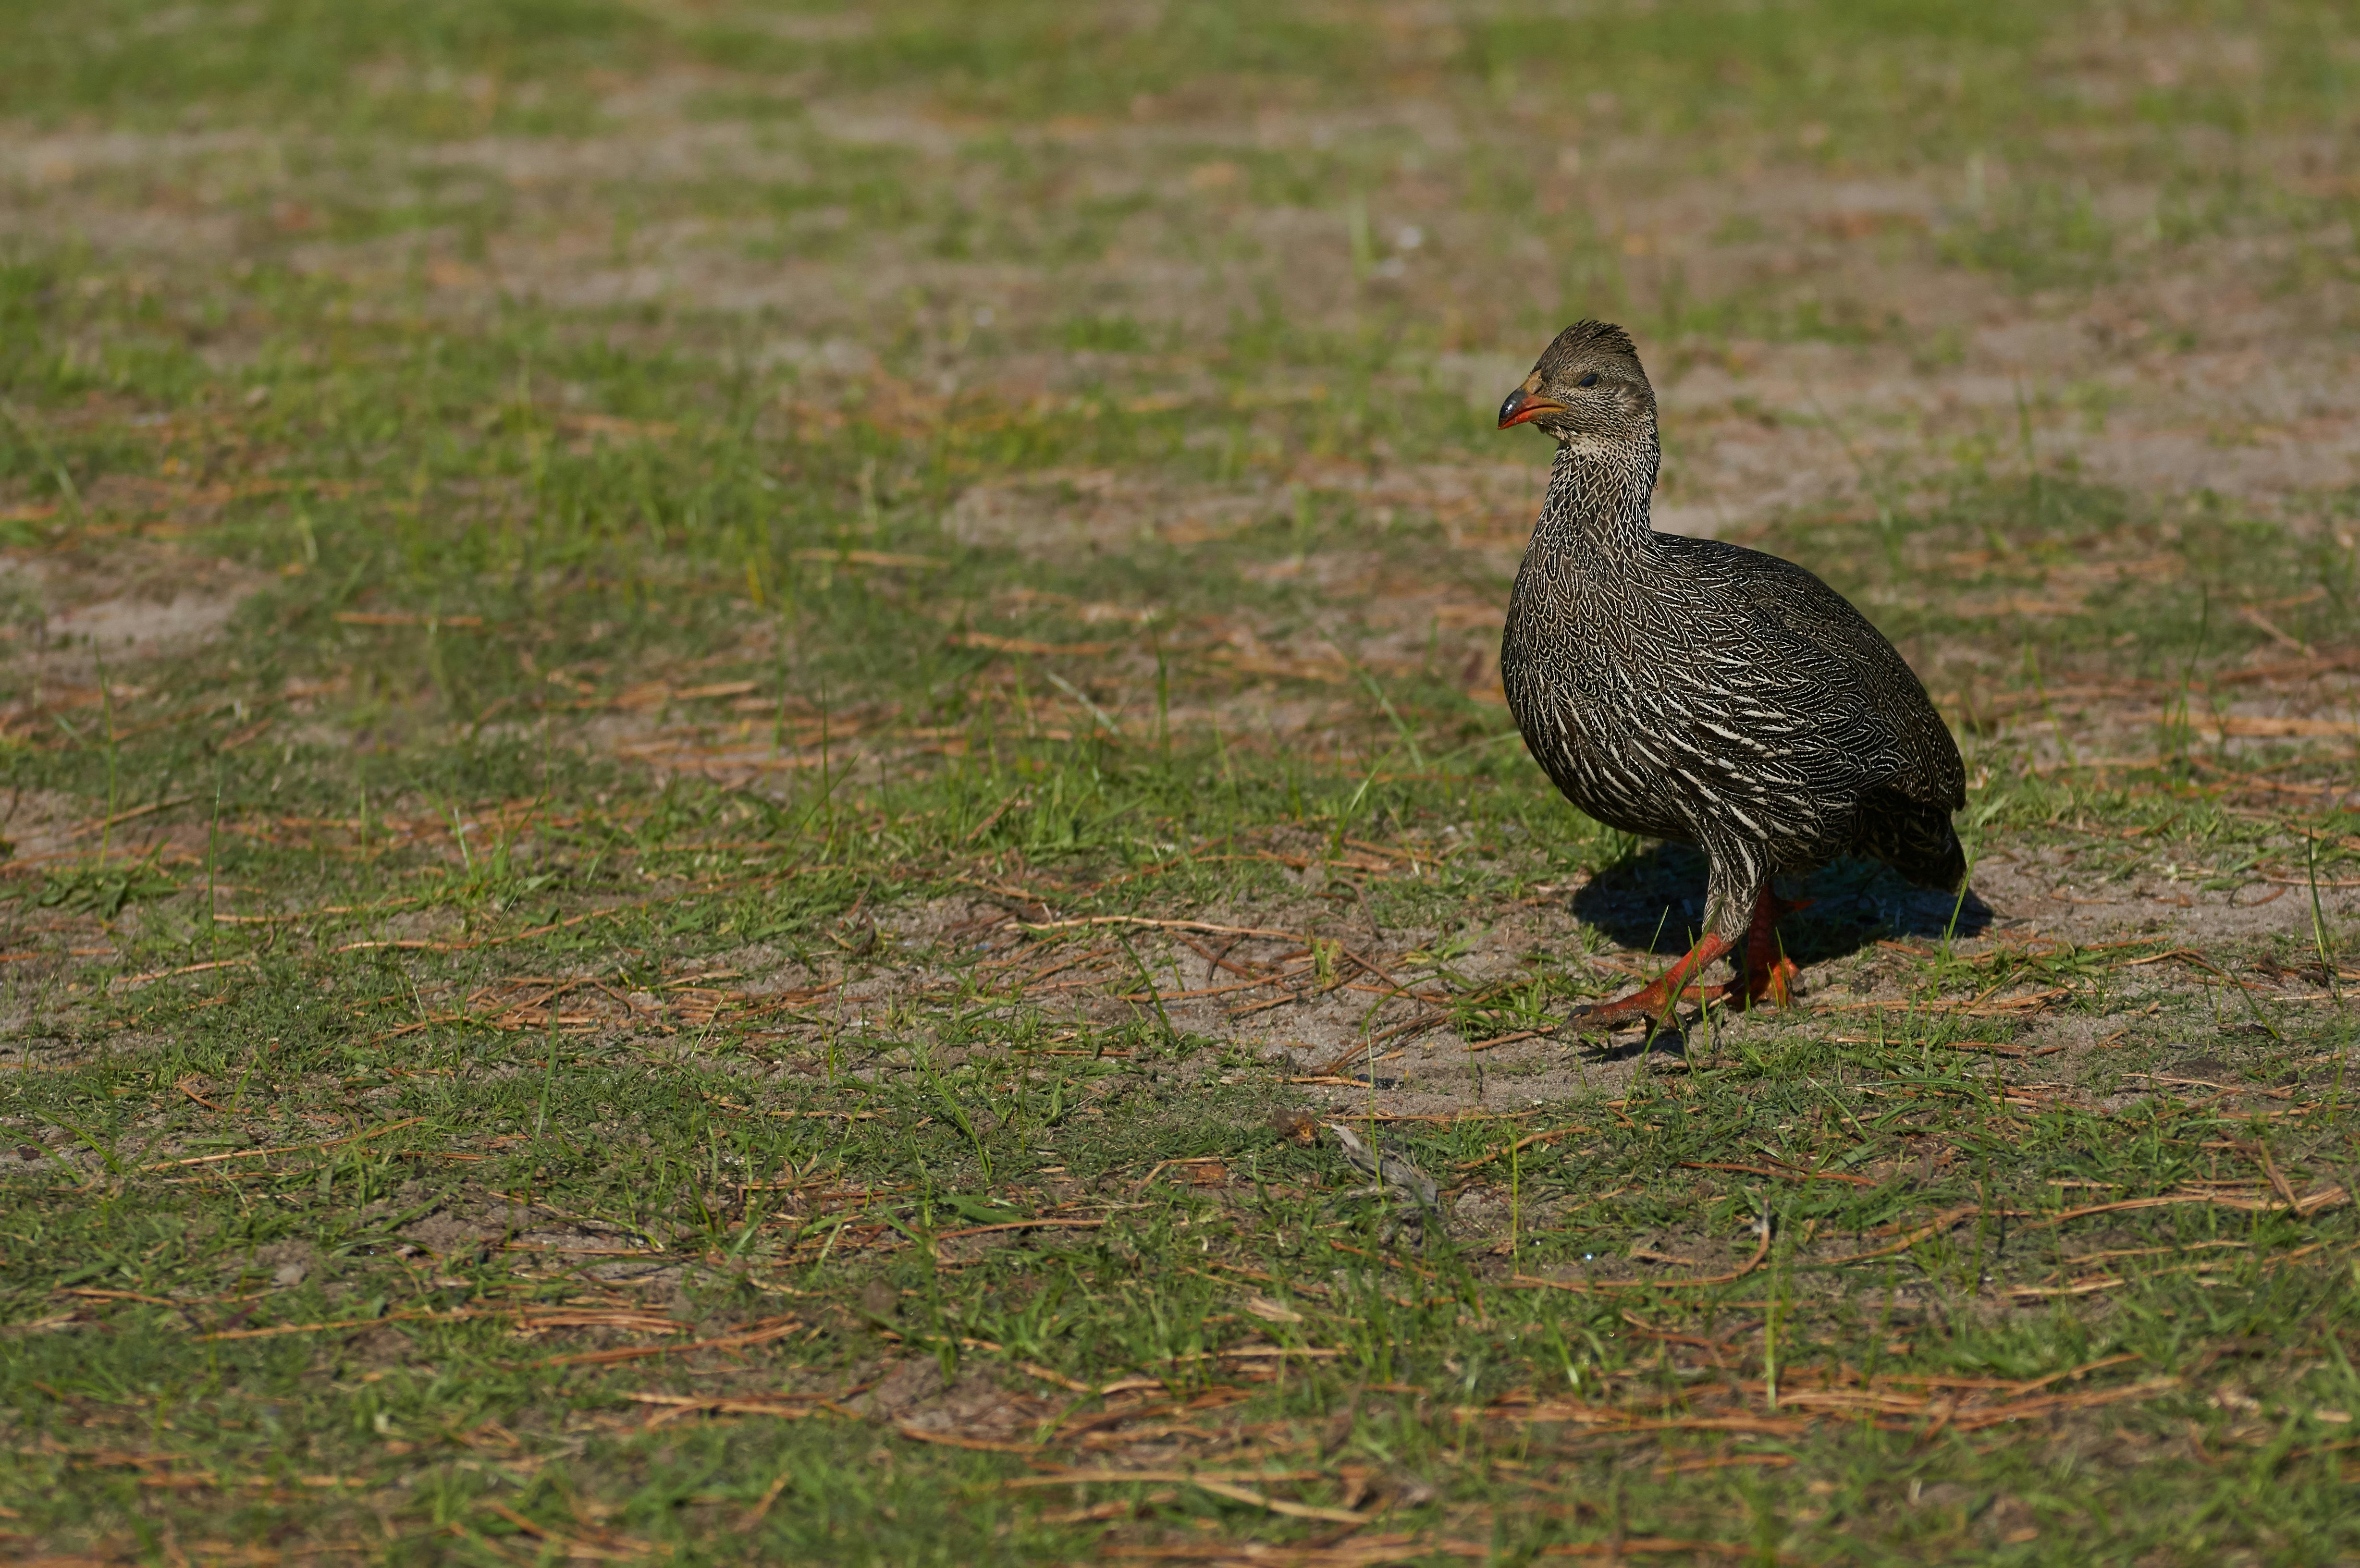 black duck on brown grass field during daytime